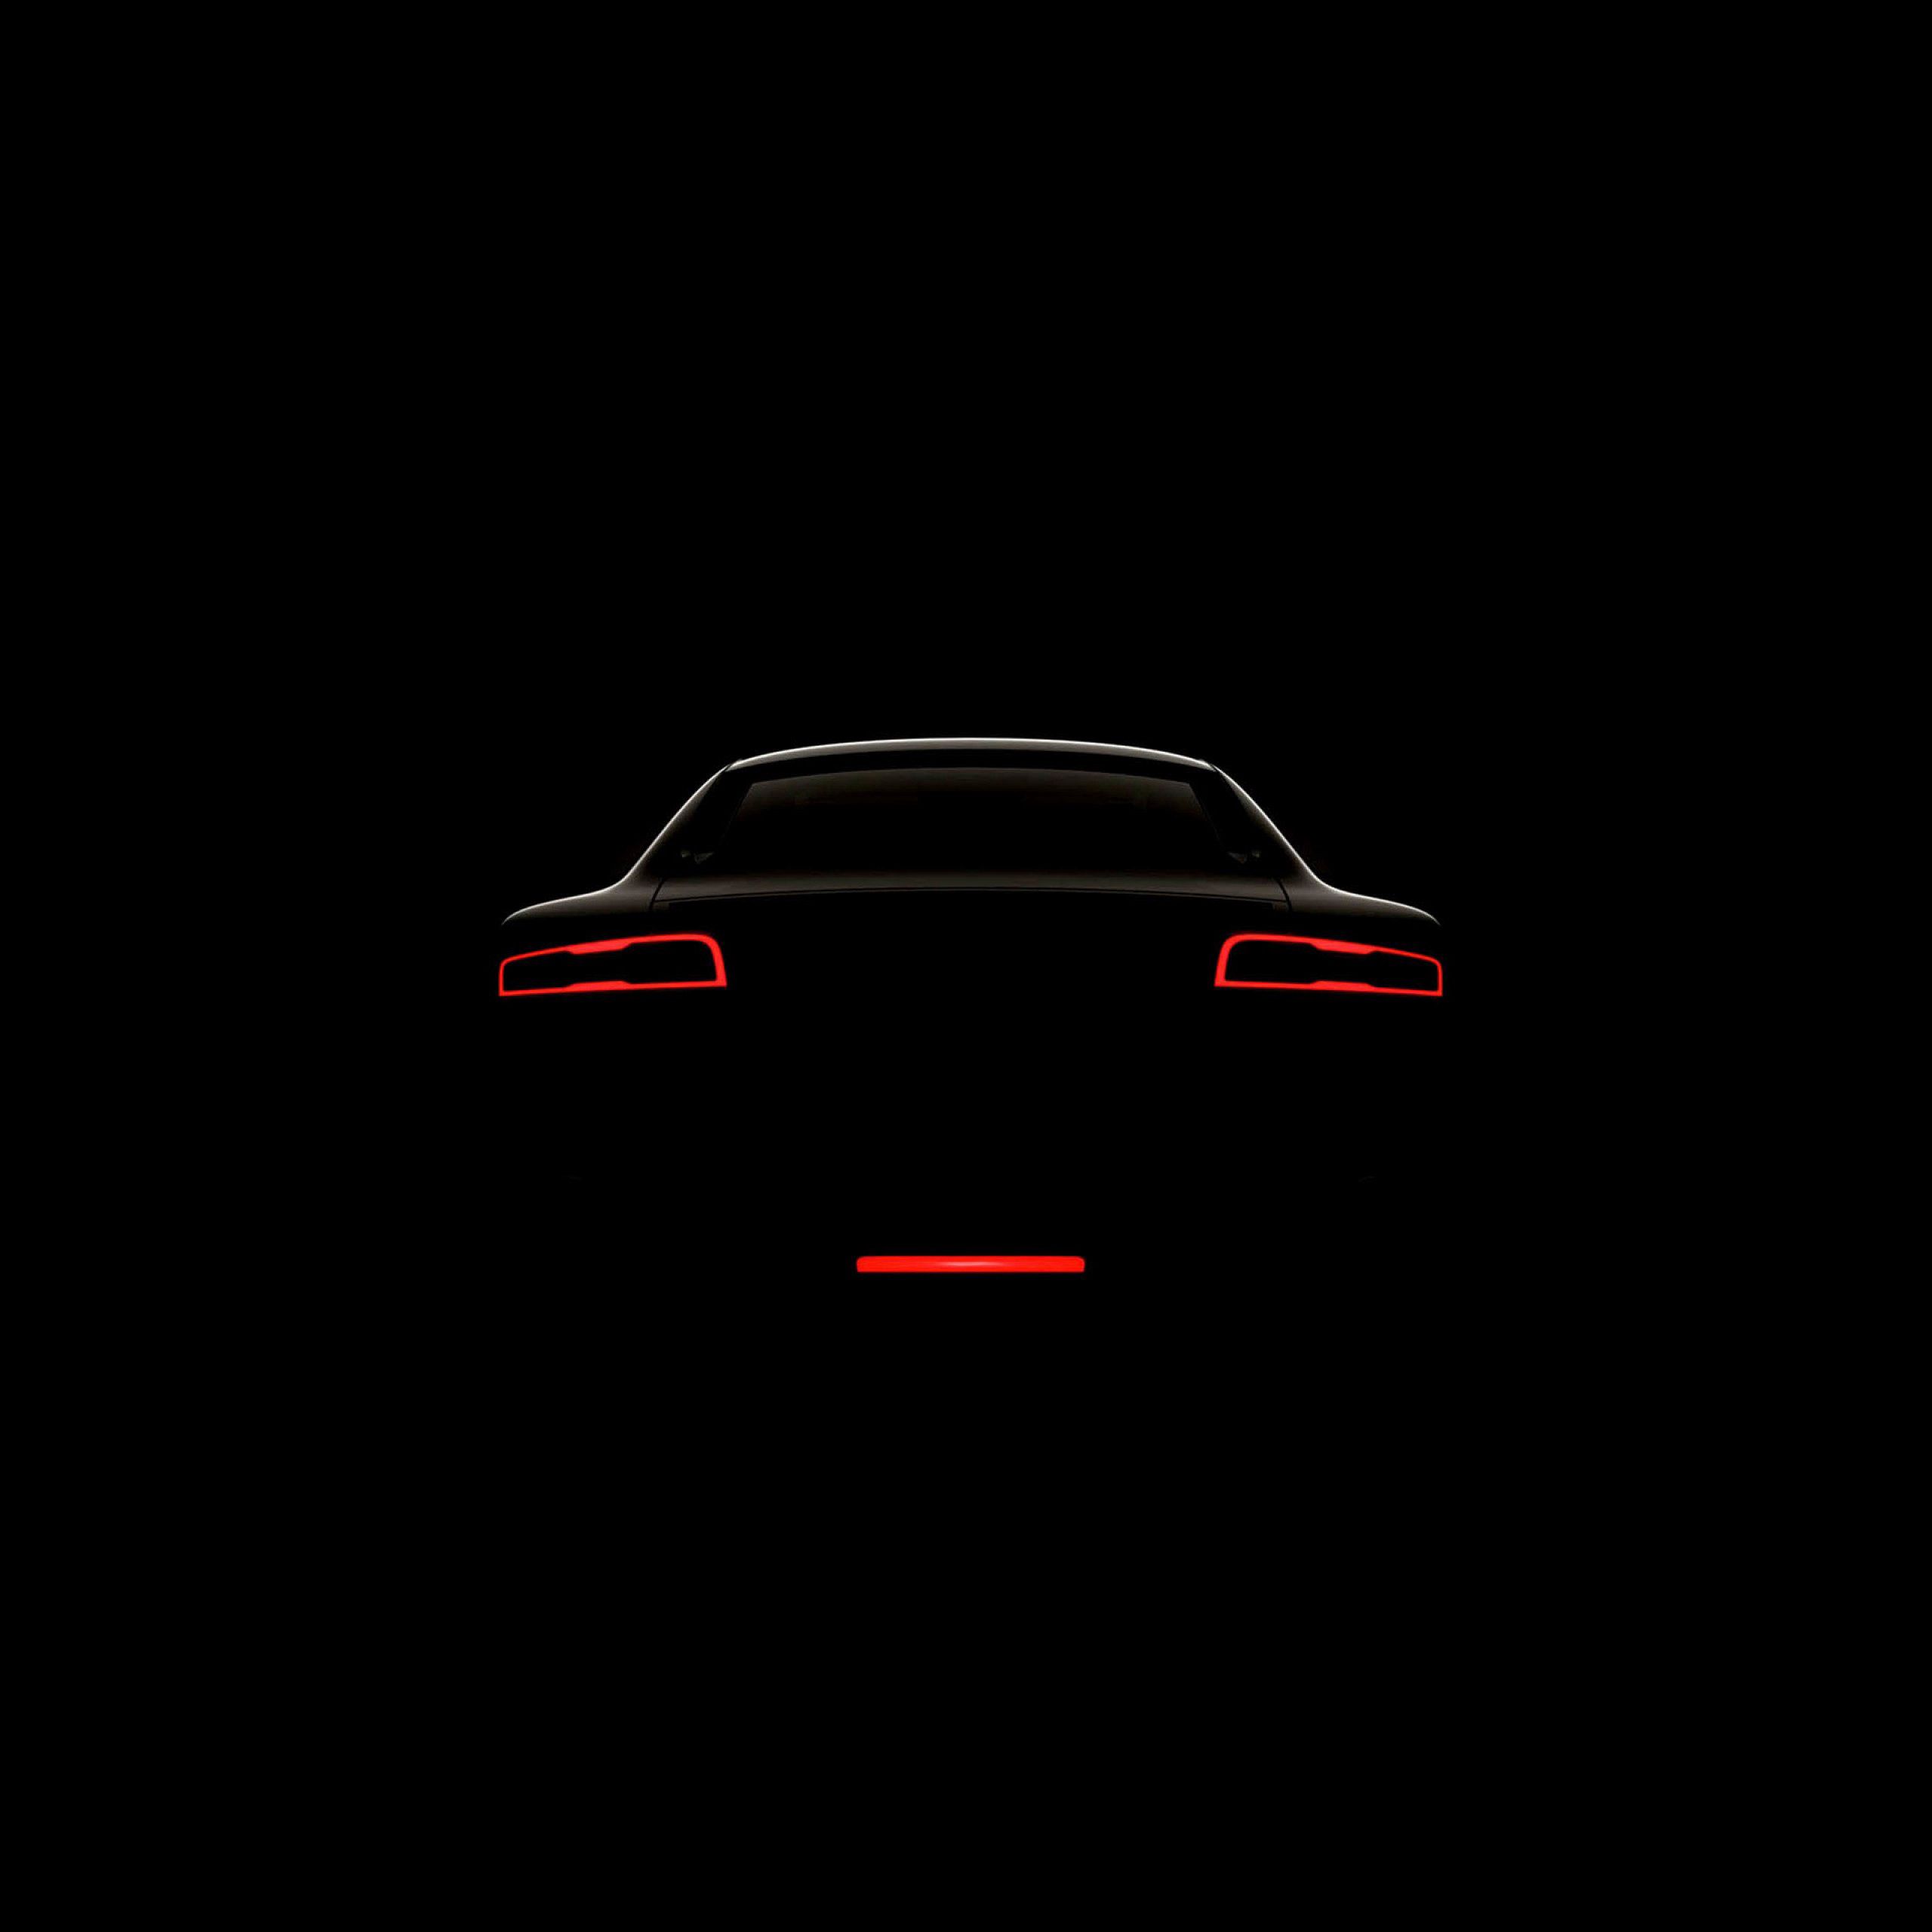 dark, car, minimalism, lights, headlights 2160p